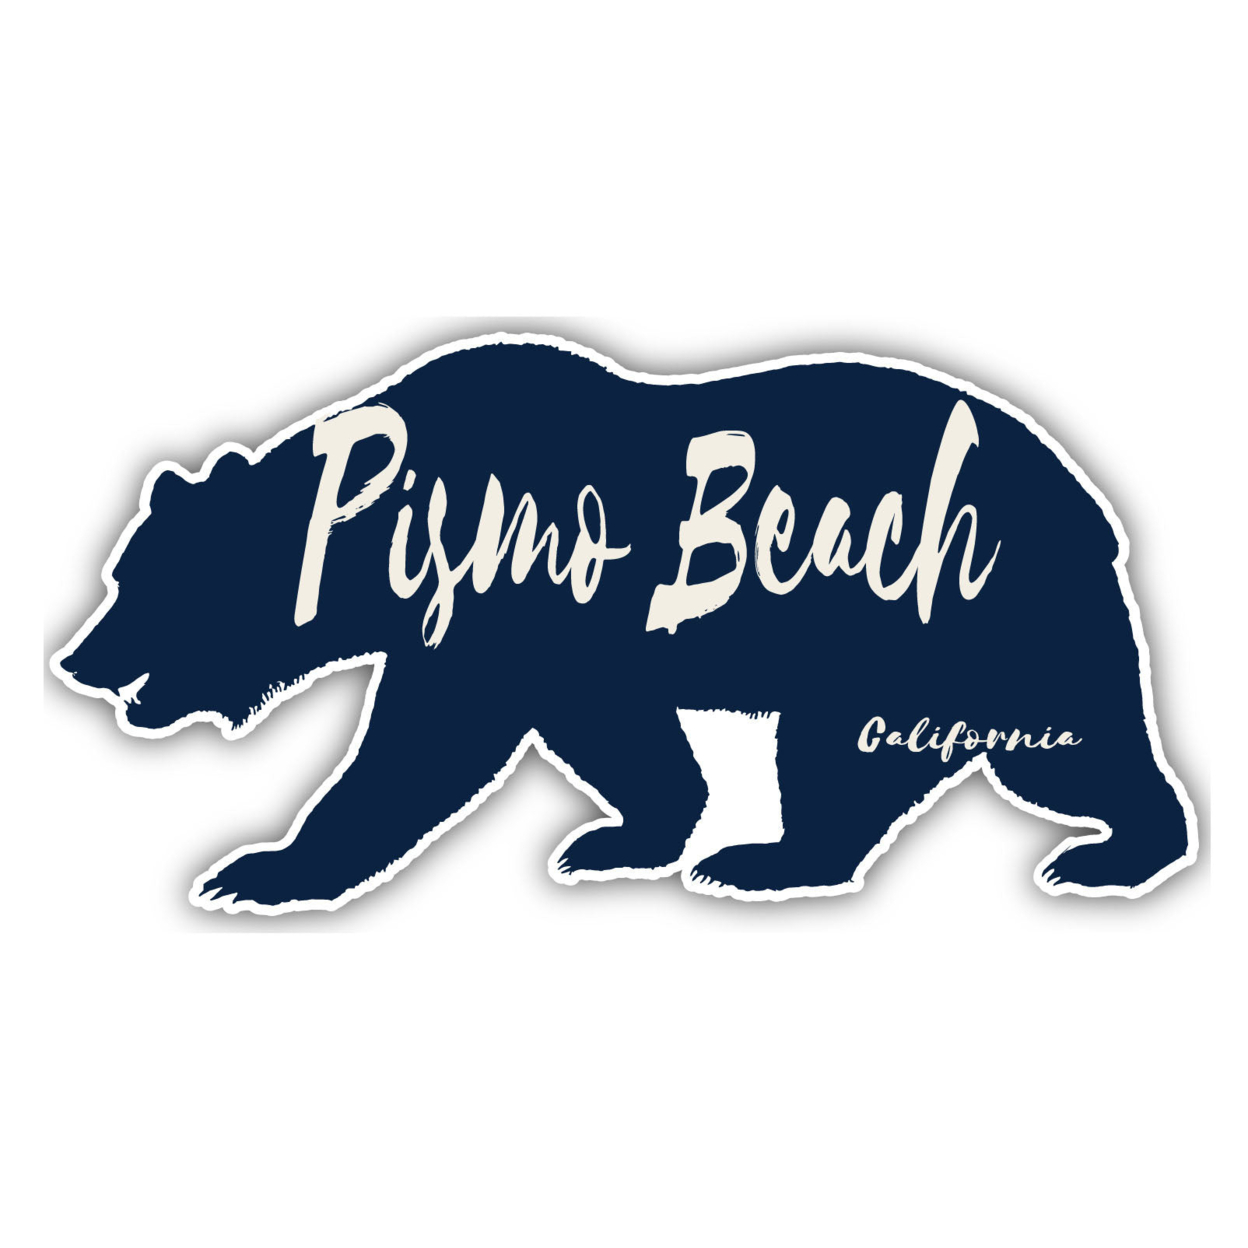 Pismo Beach California Souvenir Decorative Stickers (Choose Theme And Size) - Single Unit, 4-Inch, Camp Life